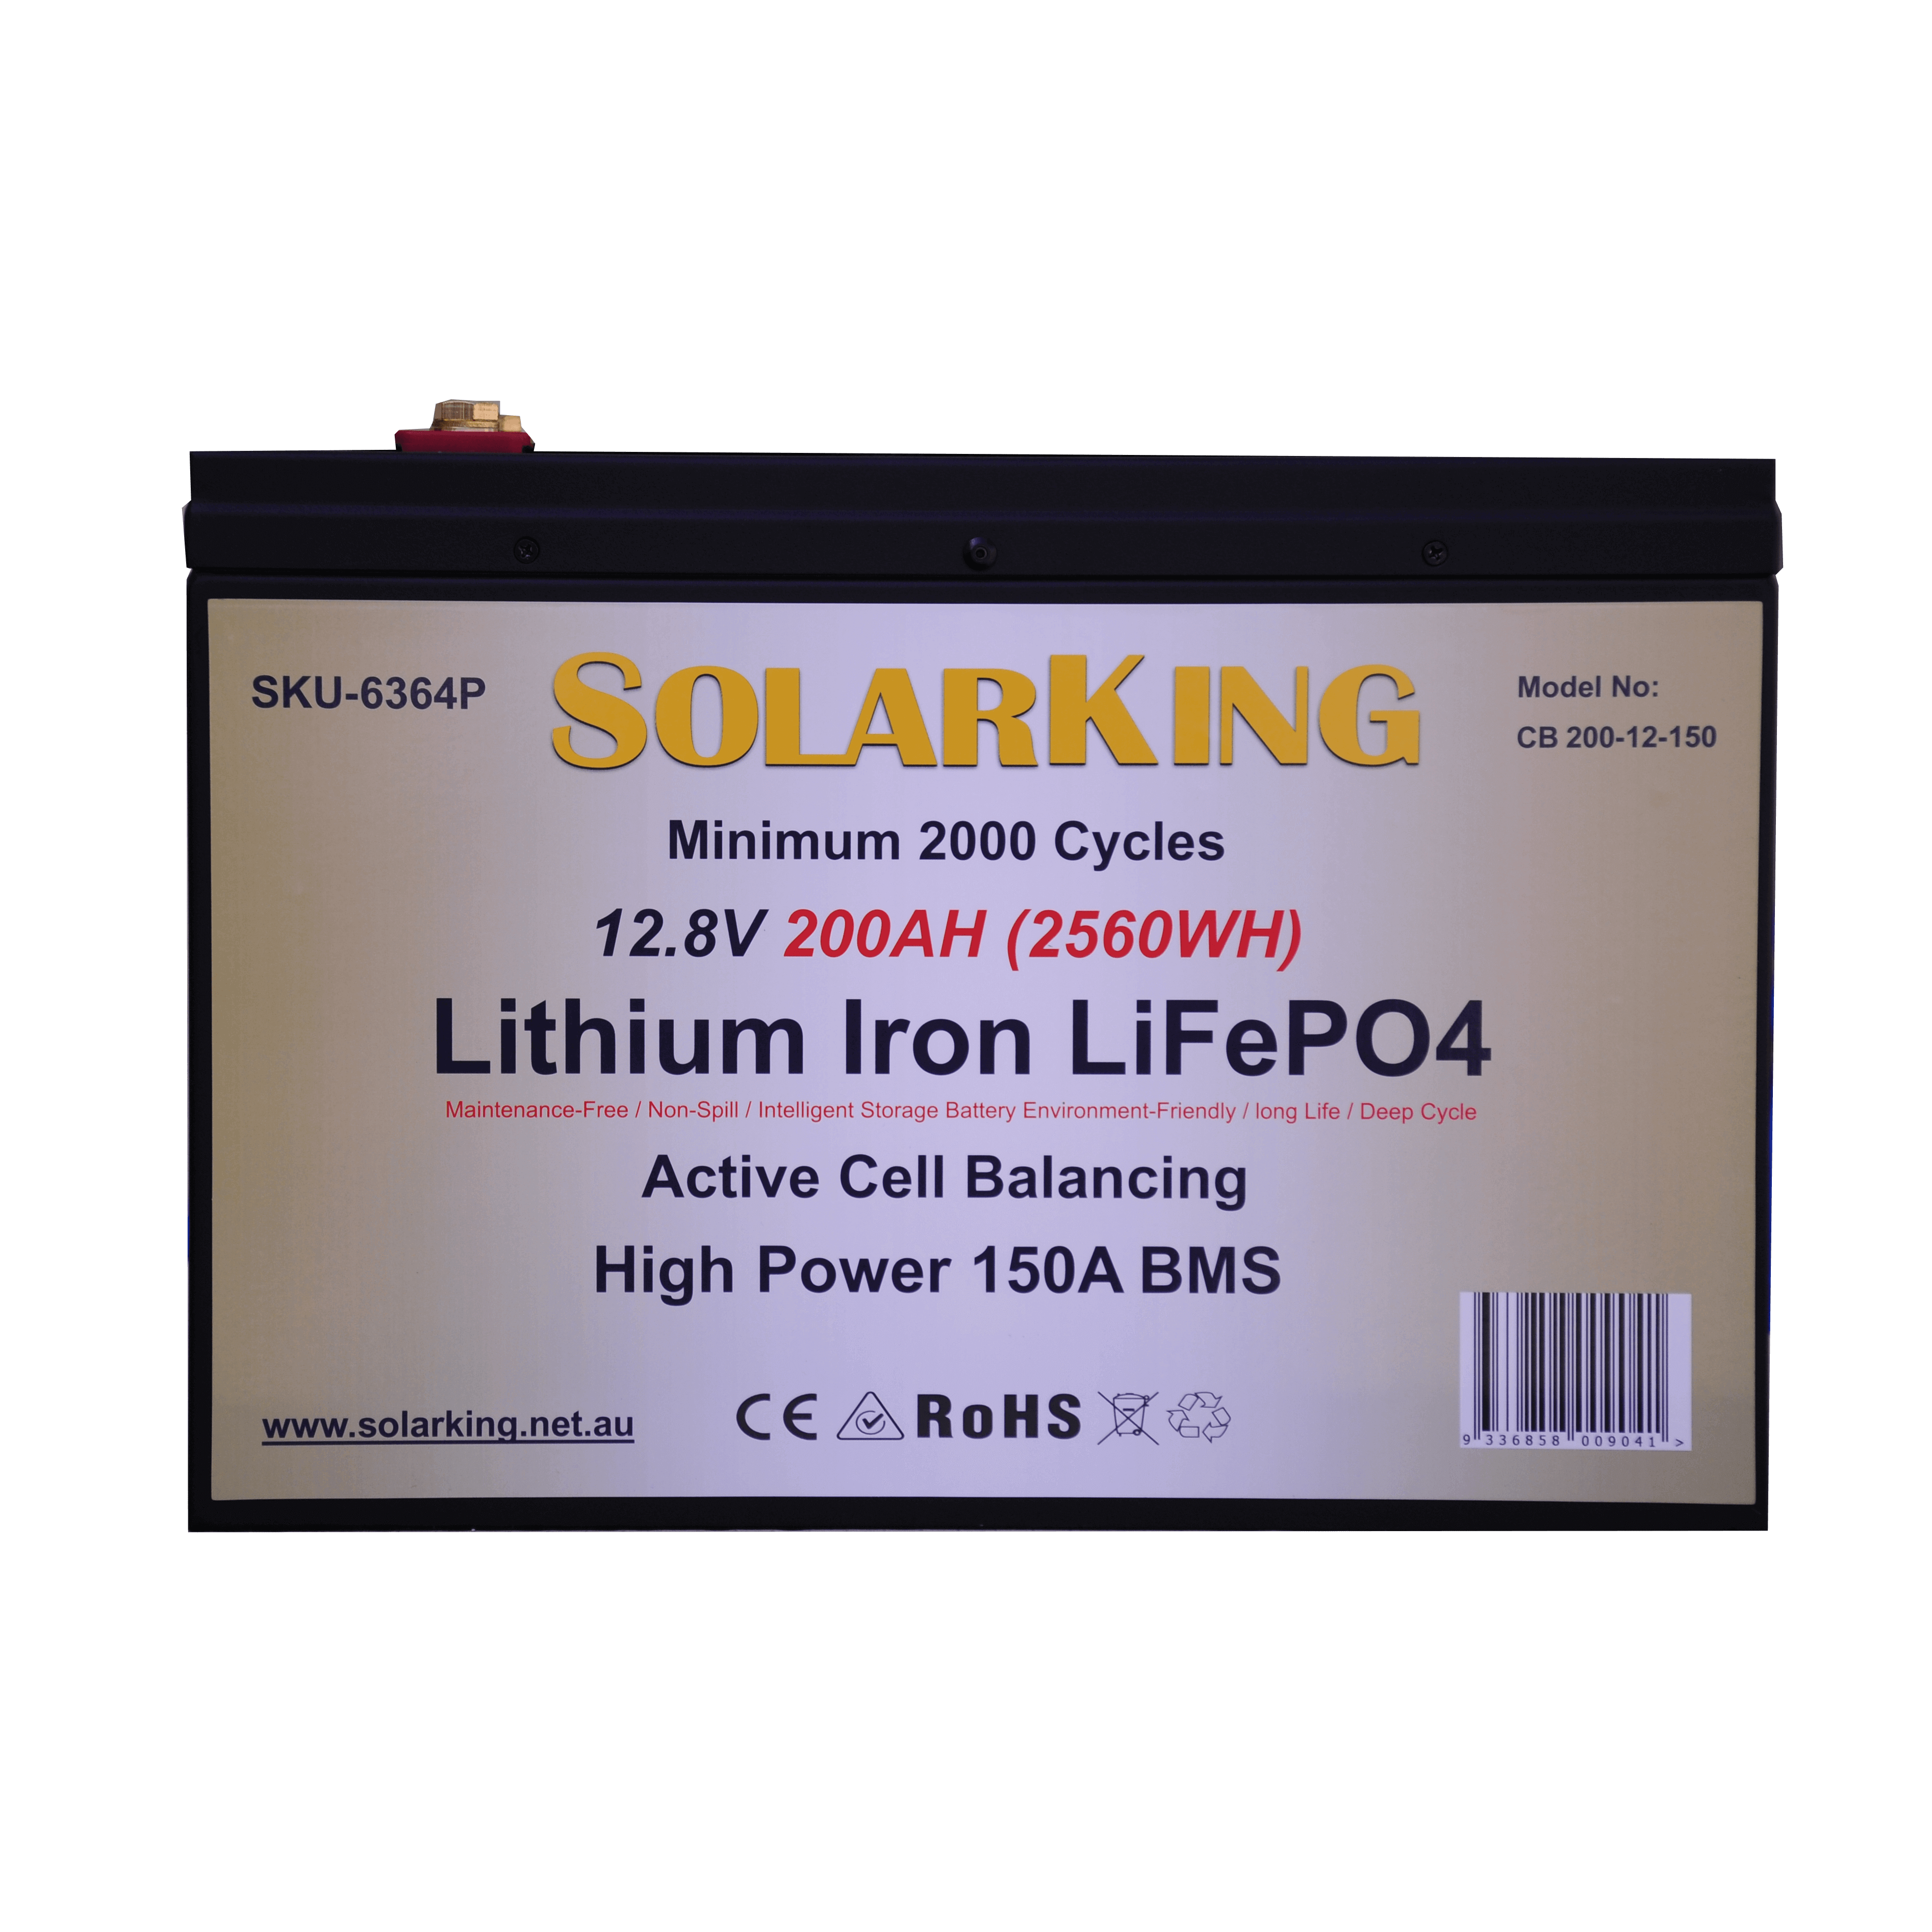 200AH Lithium Iron SolarKing Battery - CB-200-12-150